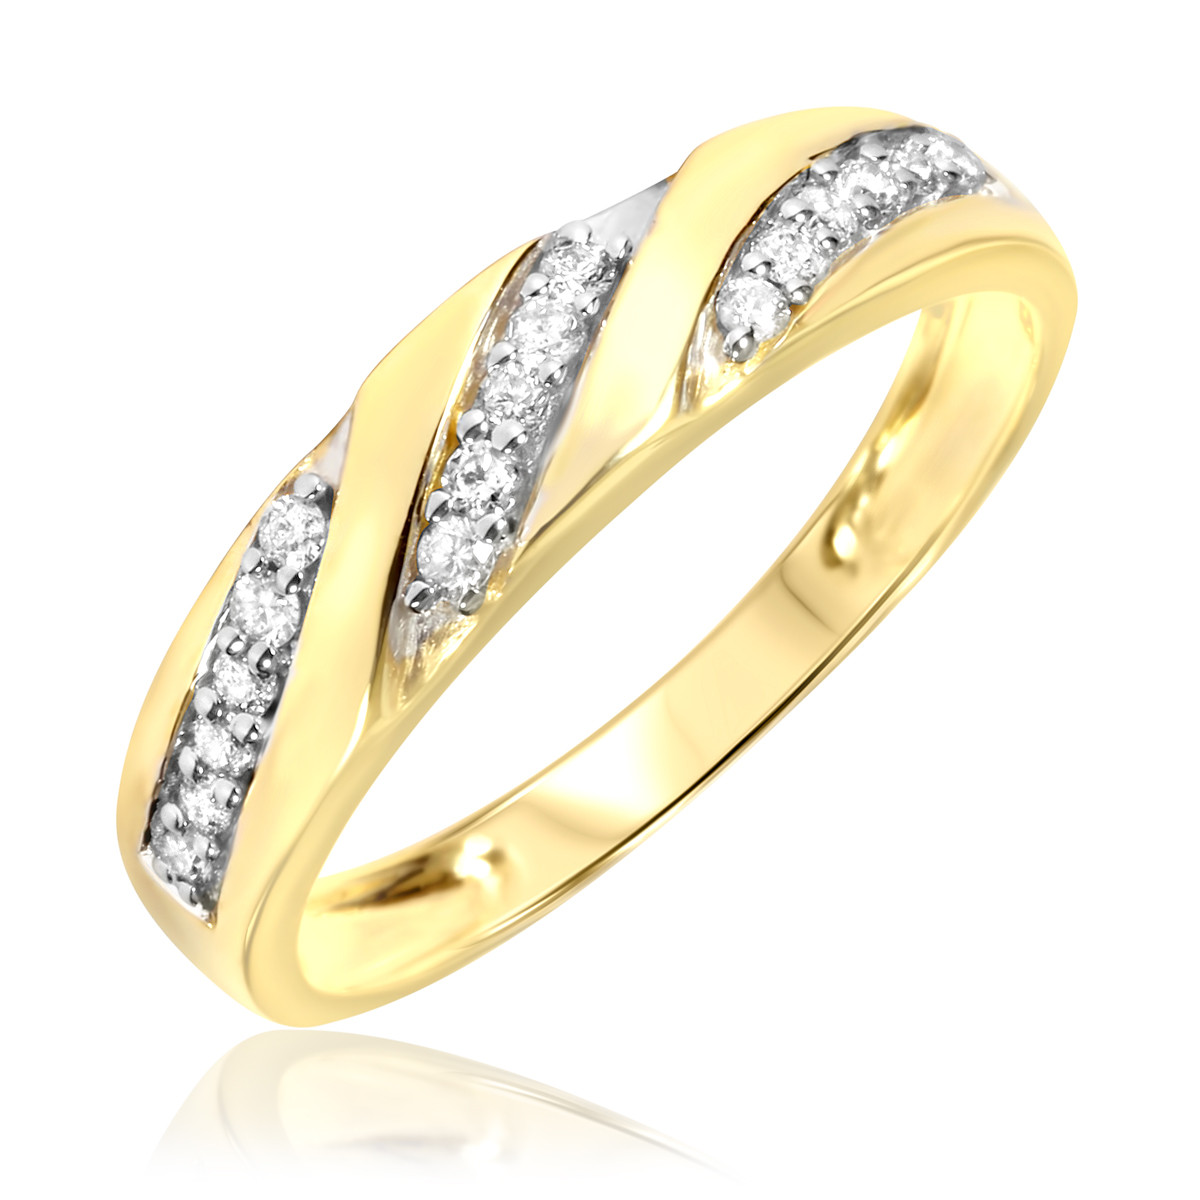 Mens Diamond Wedding Bands Yellow Gold
 1 4 Carat T W Diamond Men s Wedding Ring 14K Yellow Gold